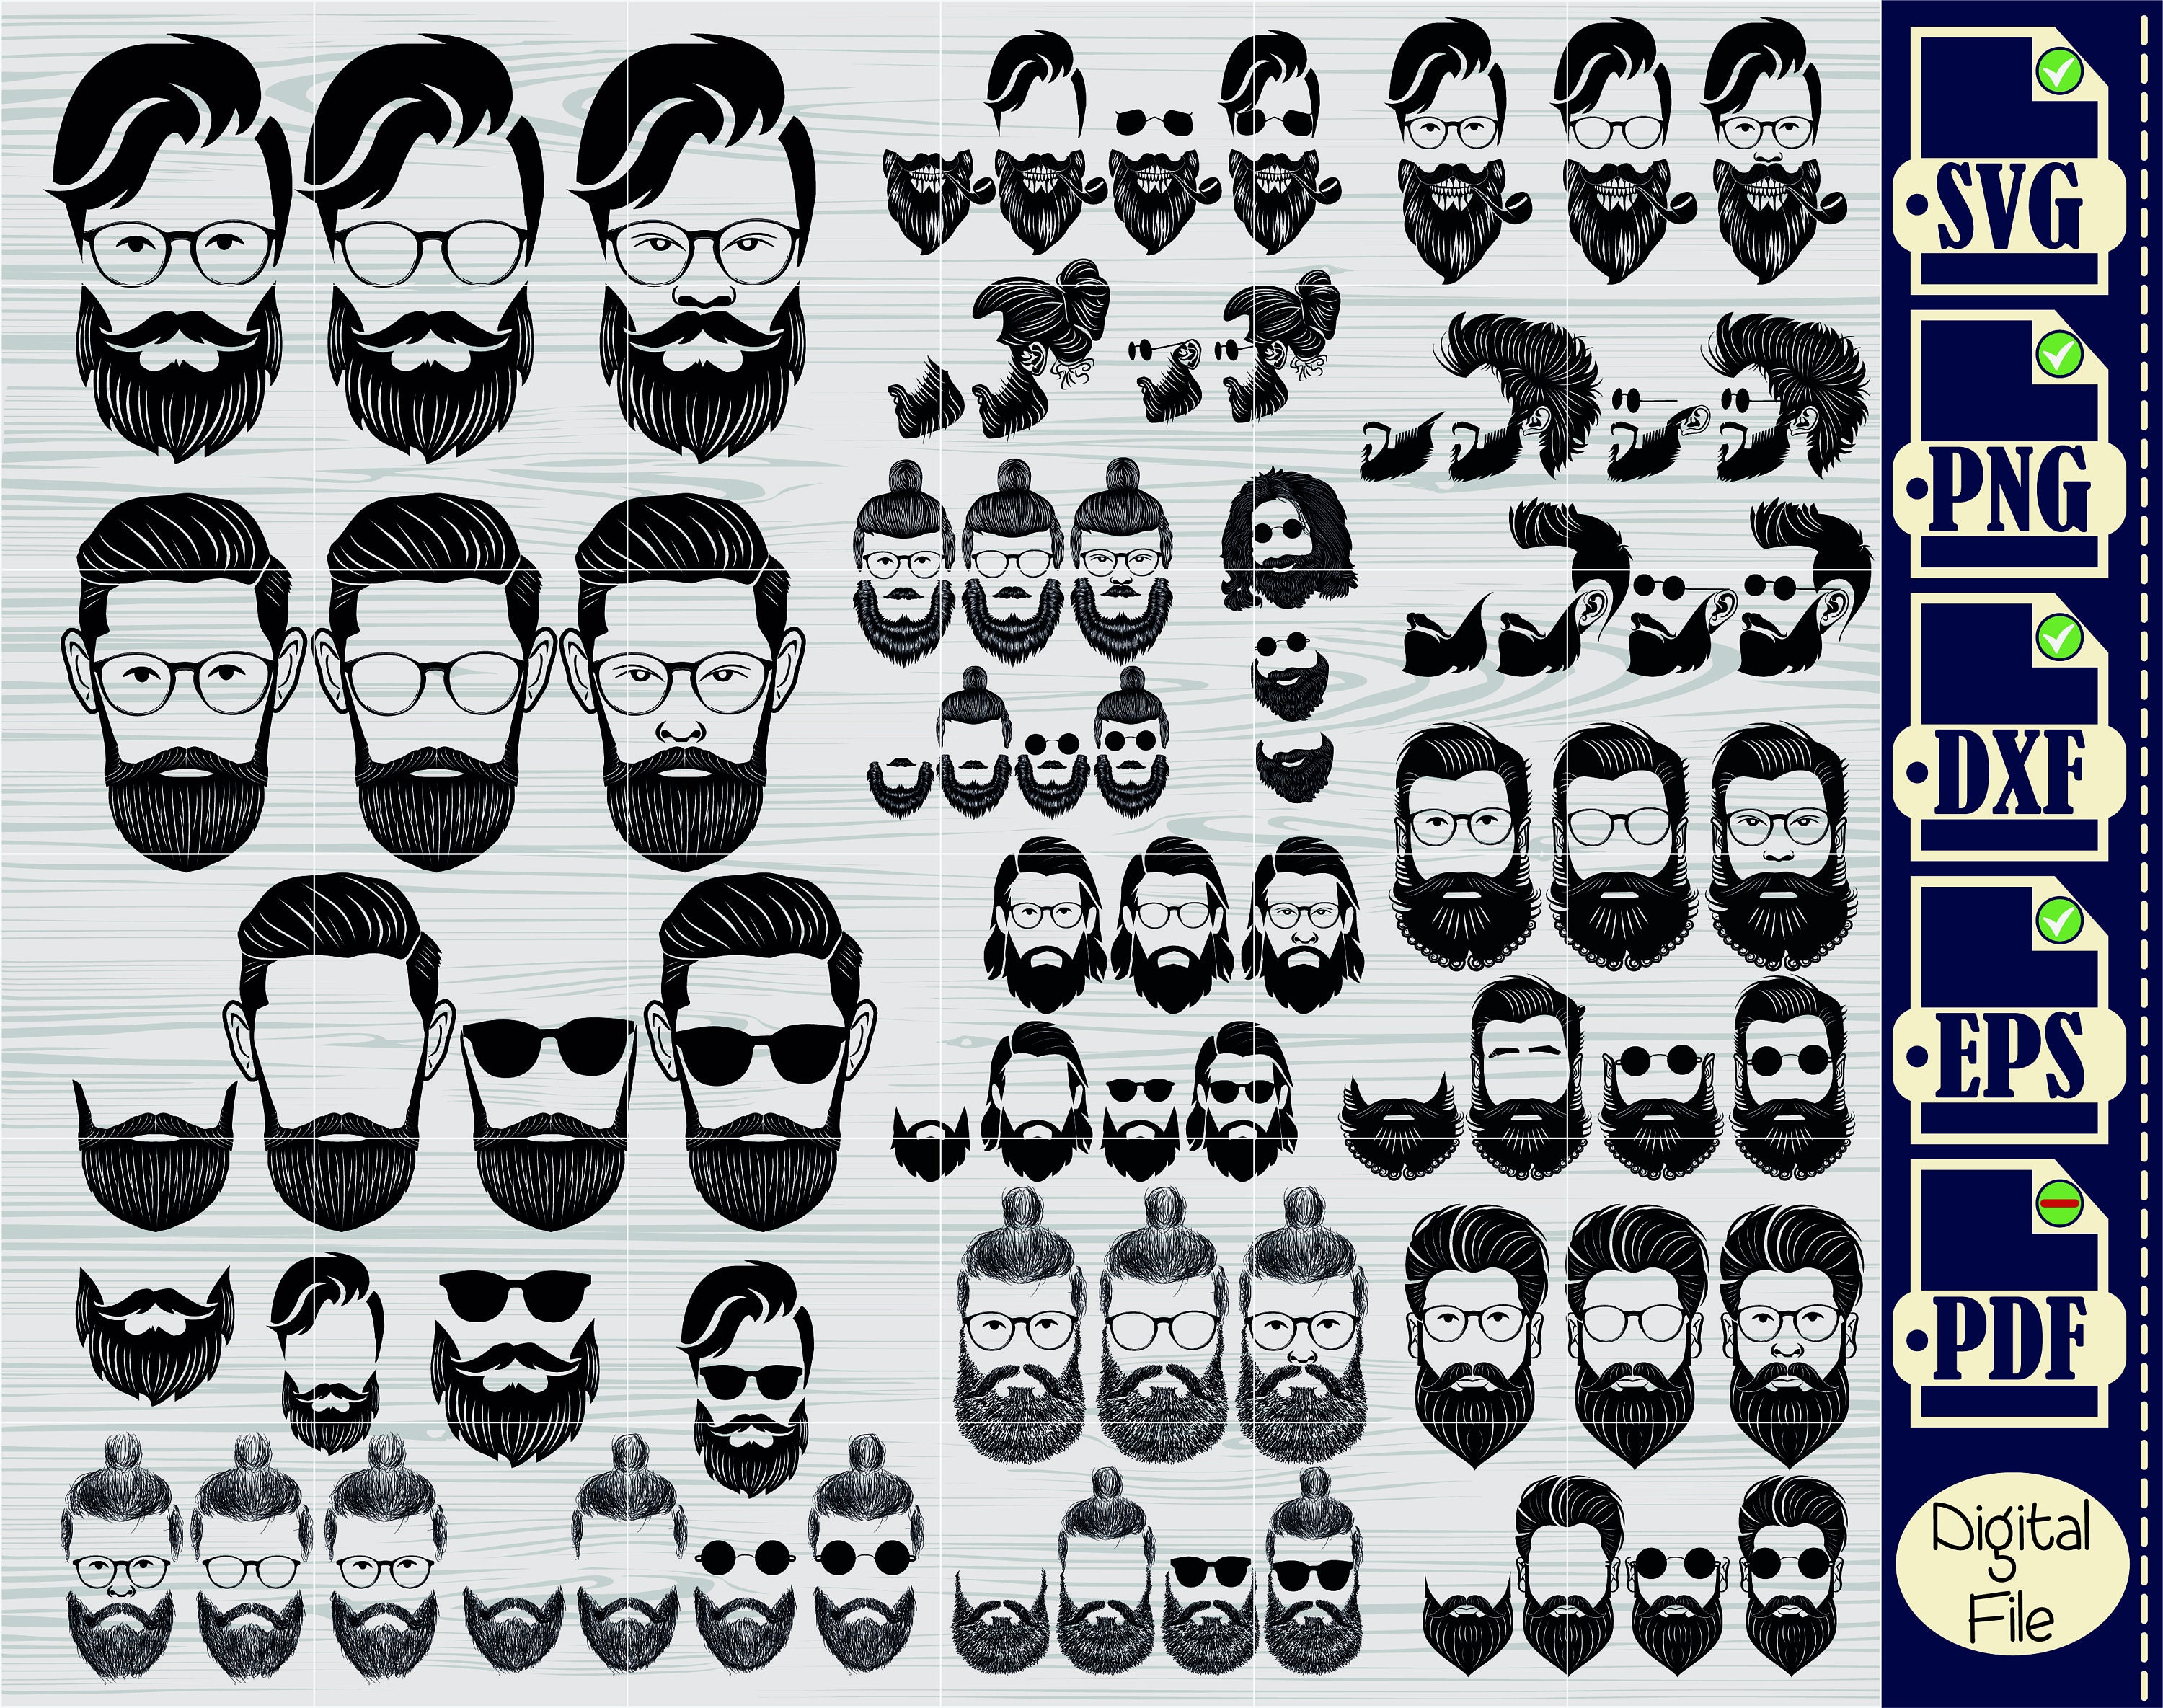 Meme SVG Cut File Nordic Man PNG Beard Barber (Instant Download) 